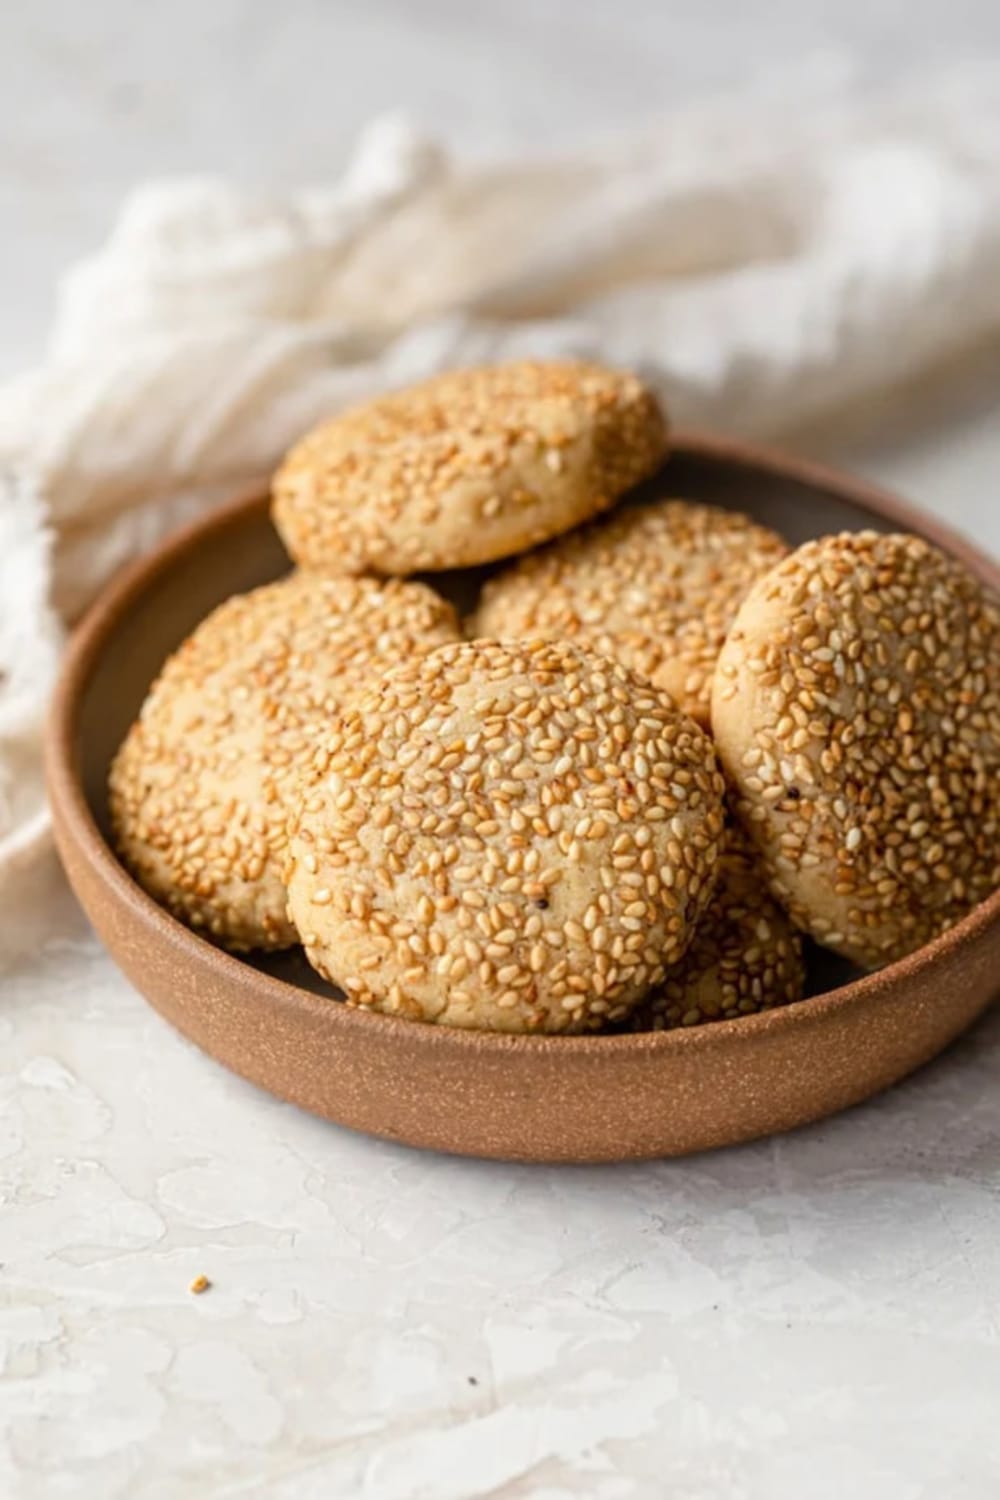 Sesame Tahini Cookies